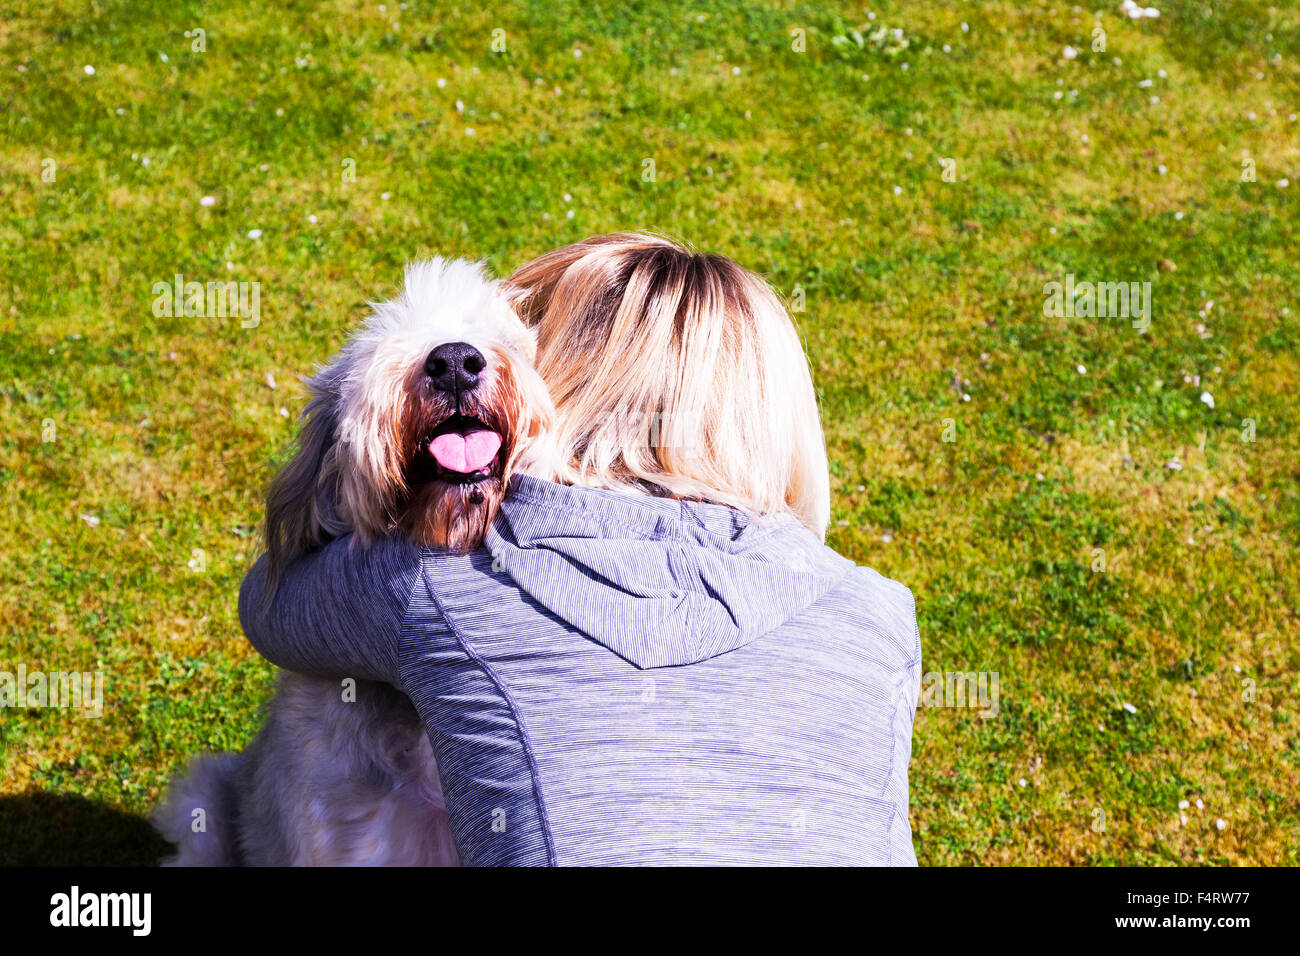 Abrazos afecto para perro mascota canina abrazo amoroso amor incondicional  abrazos ama a los perros mascotas mujer joven dama Fotografía de stock -  Alamy